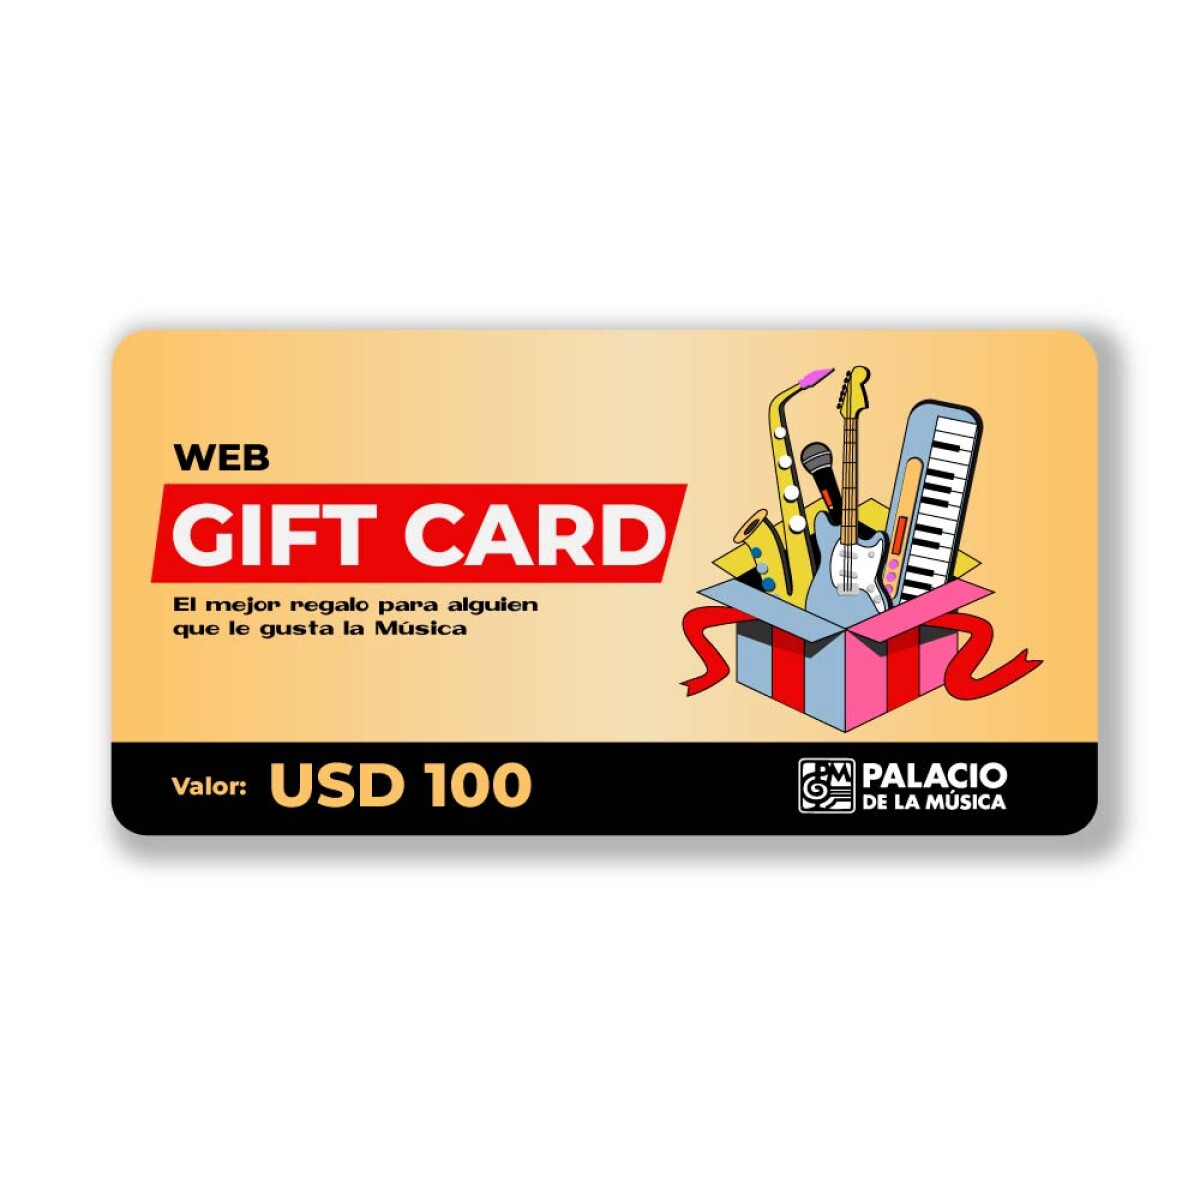 Web Gift Card | Valor Usd 100 